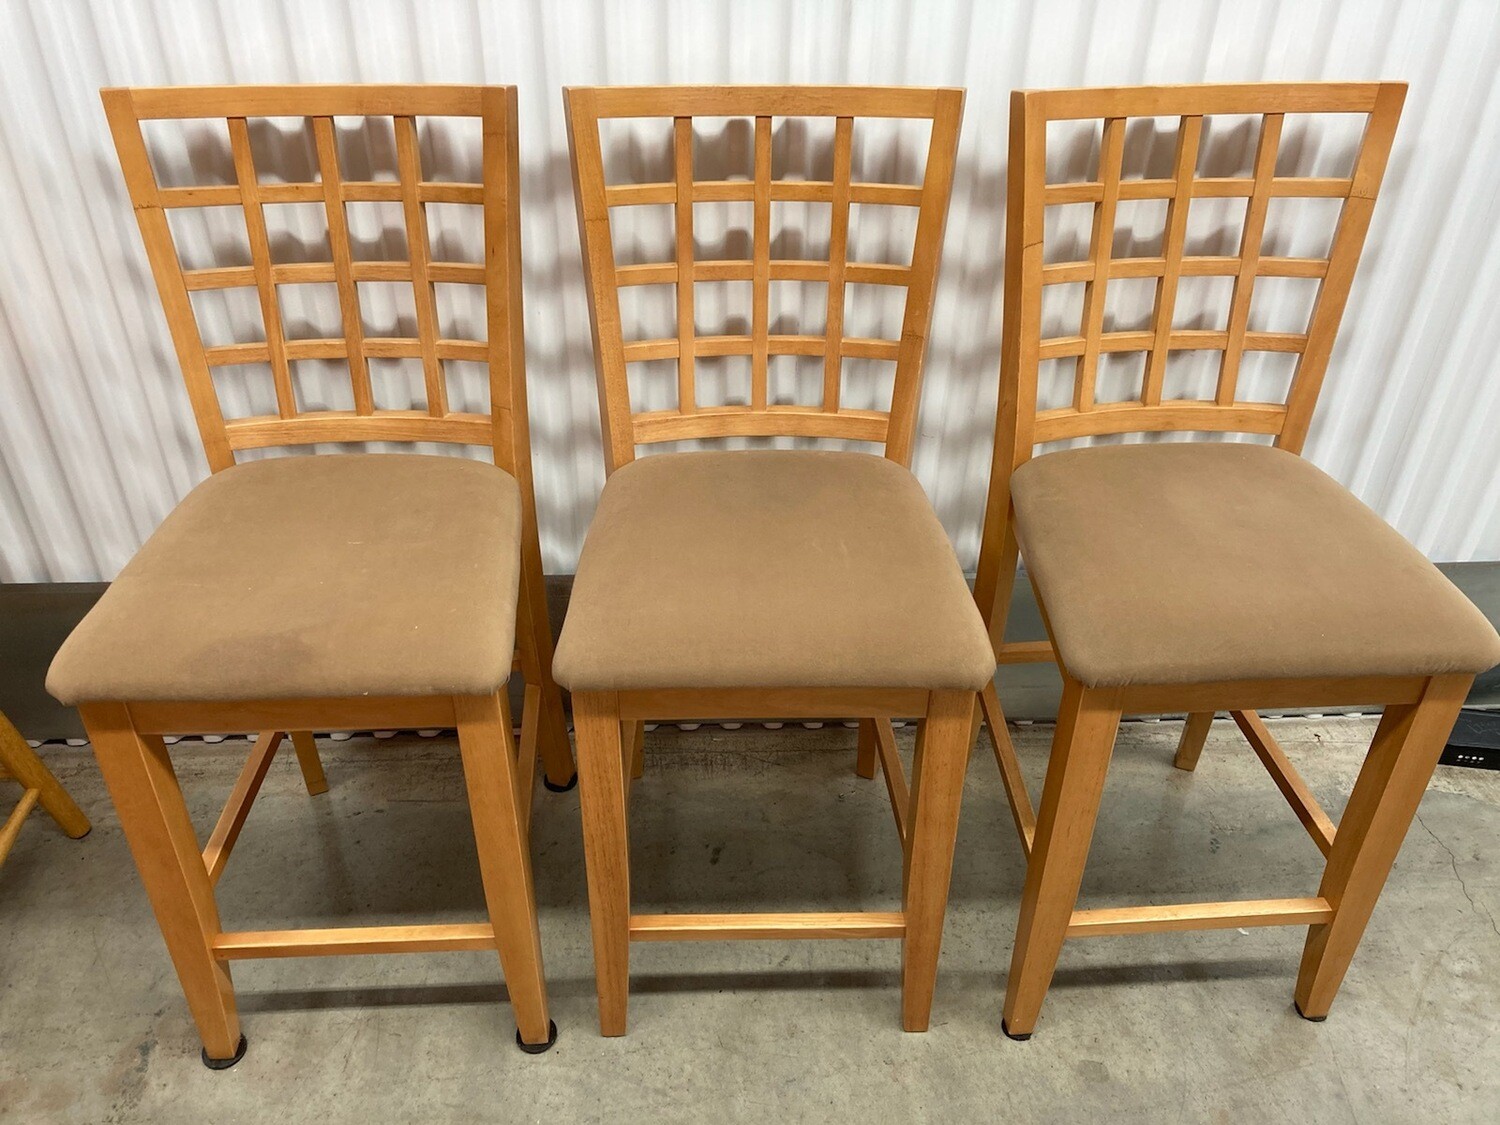 3 Hi-Top Chairs, set #2199